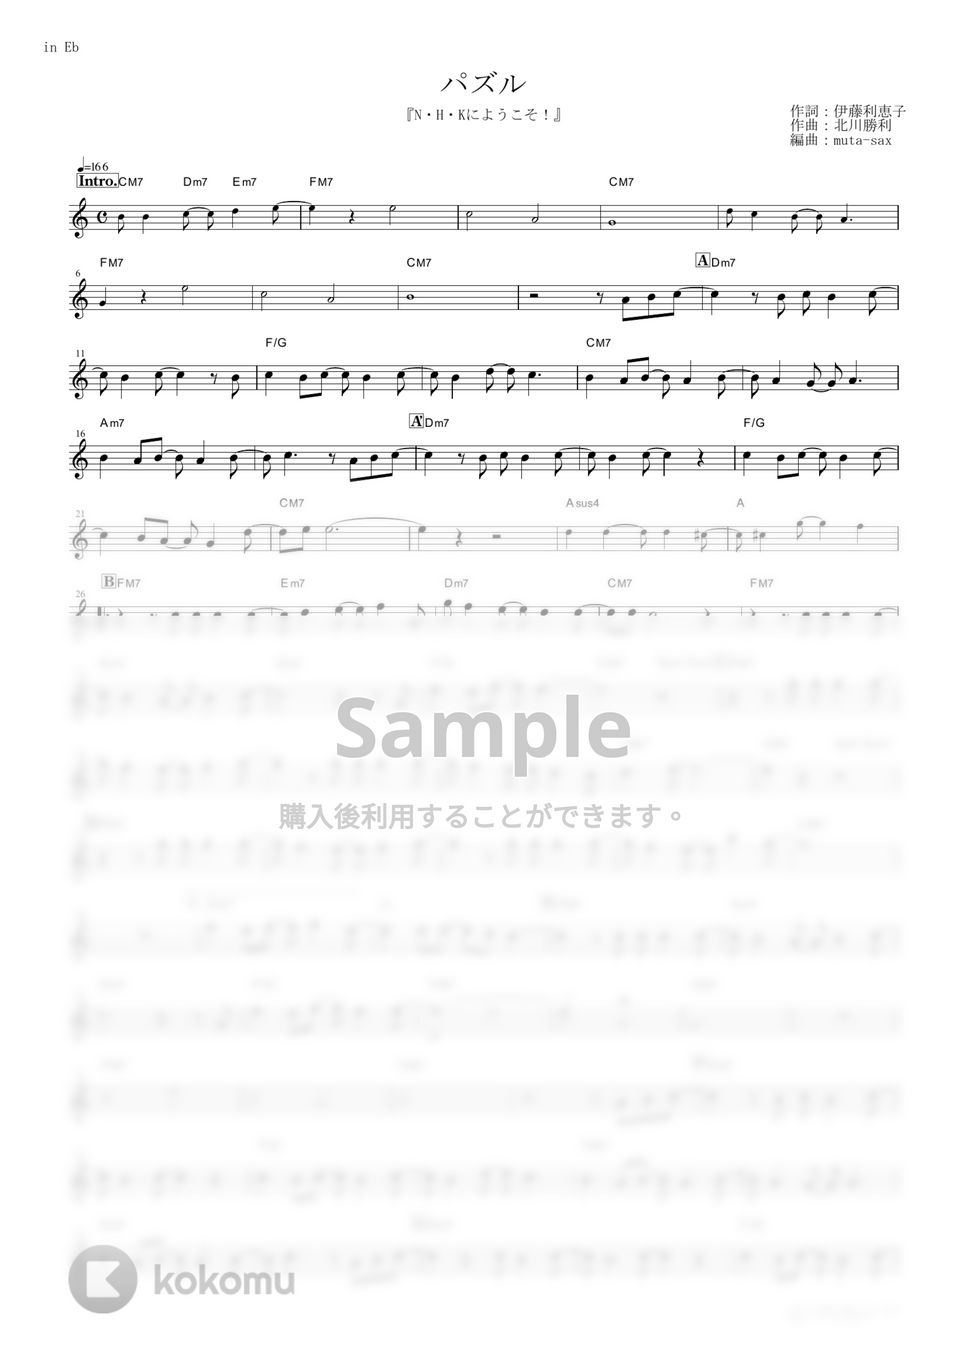 ROUND TABLE feat. Nino - パズル (『N・H・Kにようこそ！』 / in Eb) by muta-sax